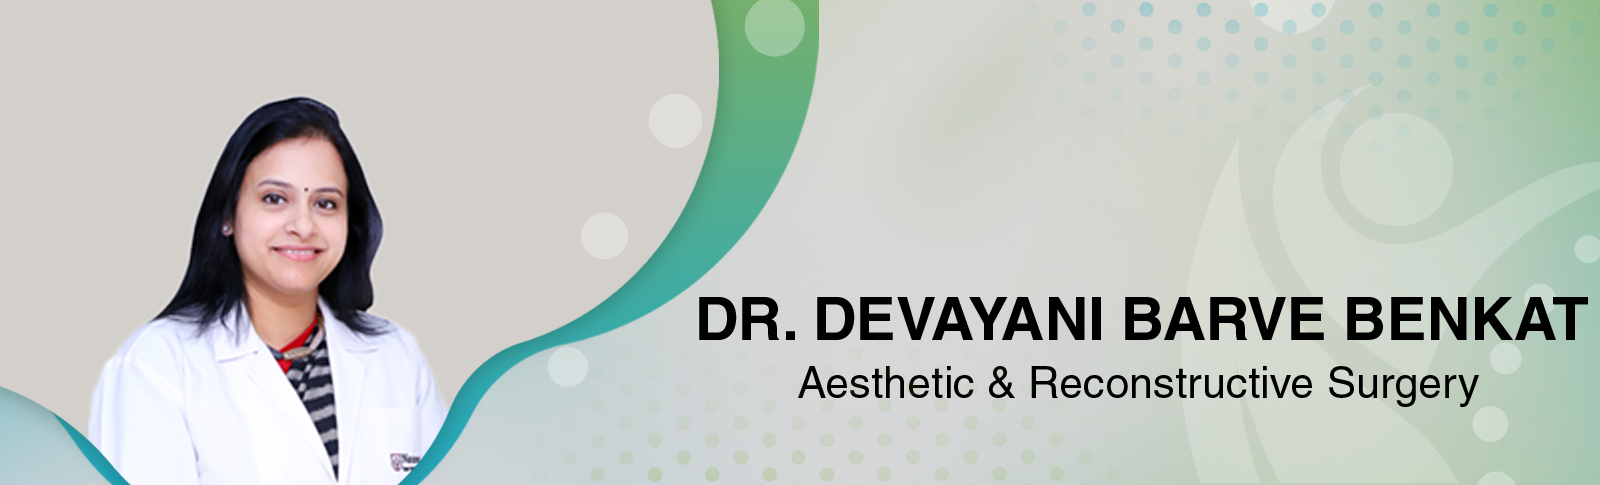 Dr. Devayani Barve Venkat